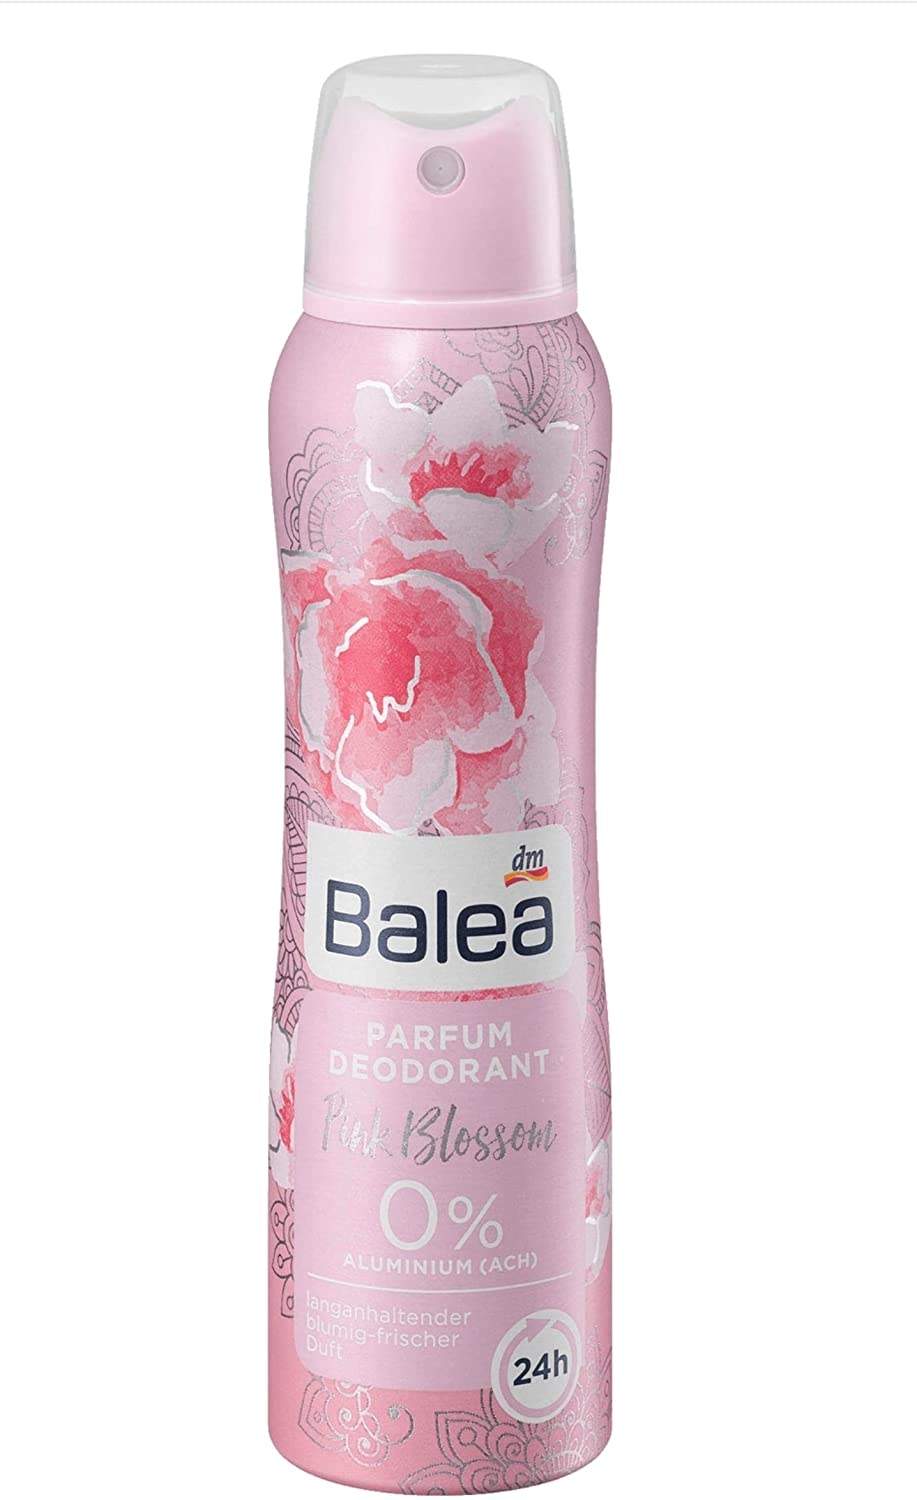 dm Balea Parfum Deodorant Pink Blossom 150 ml Test ❤️ April 2022  Testbericht.de